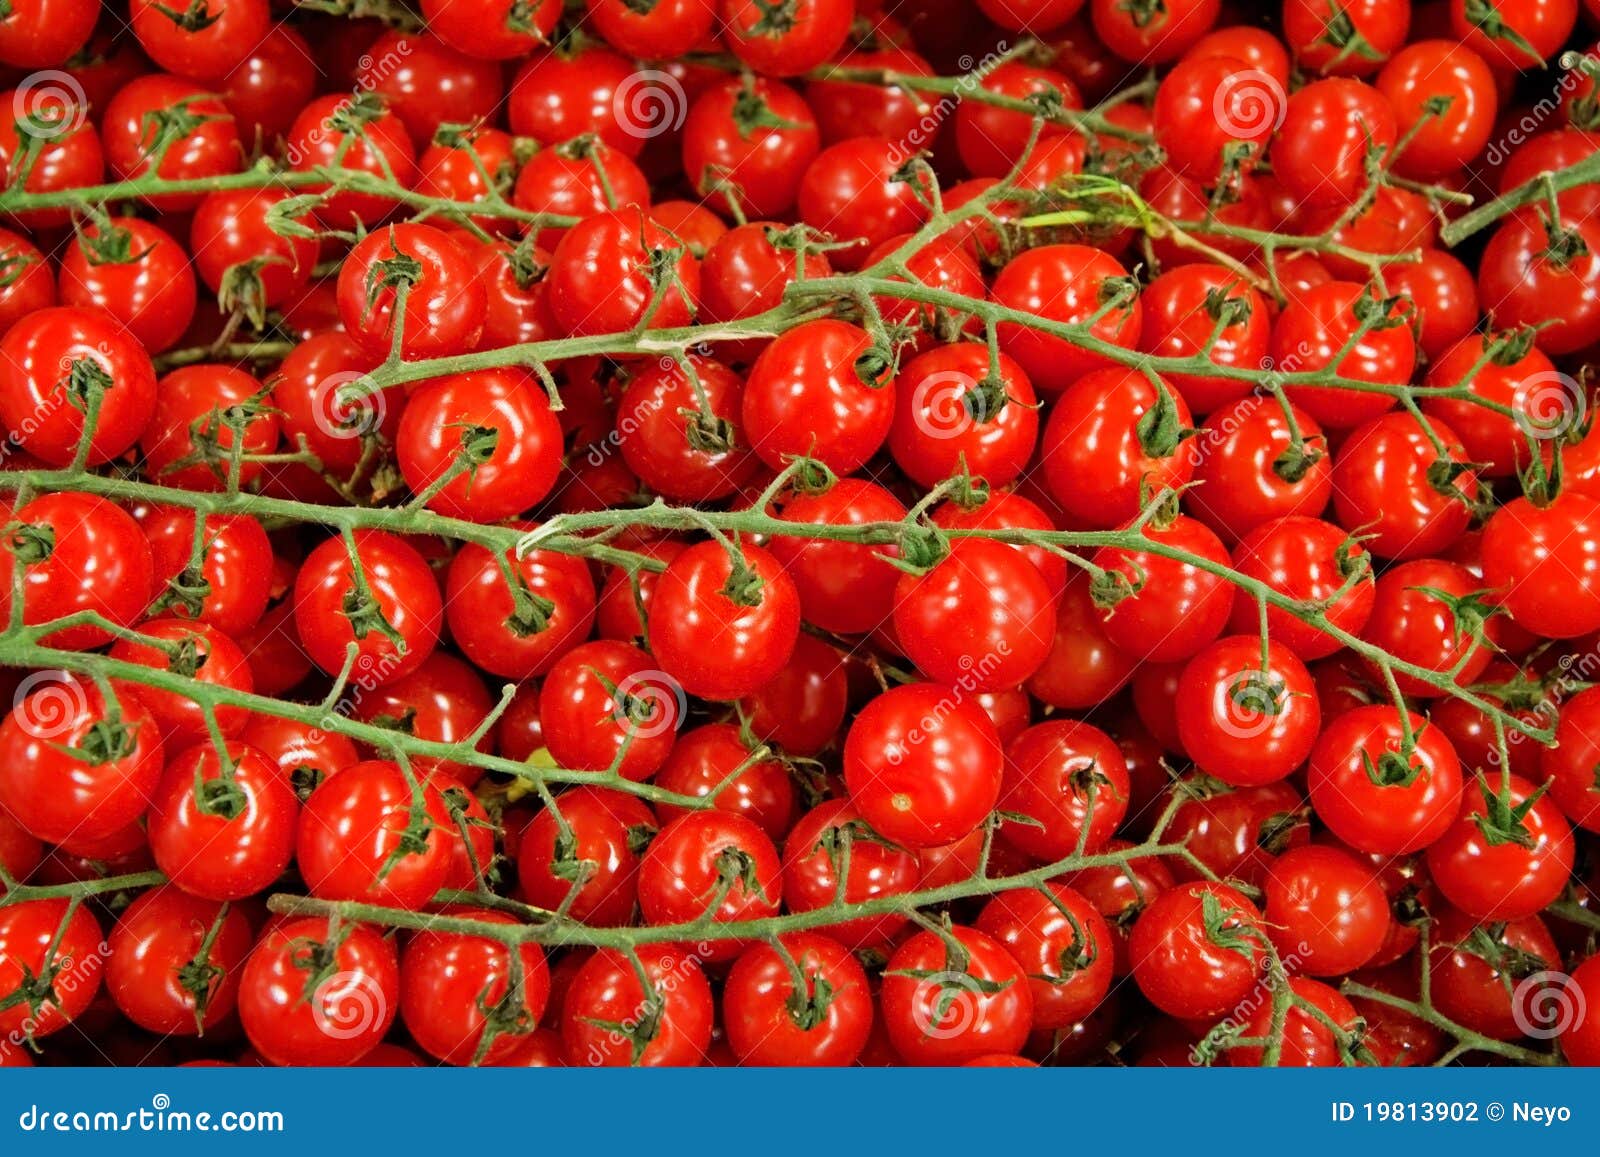 Small tomatoes stock photo. Image of grow, eating, salad - 19813902